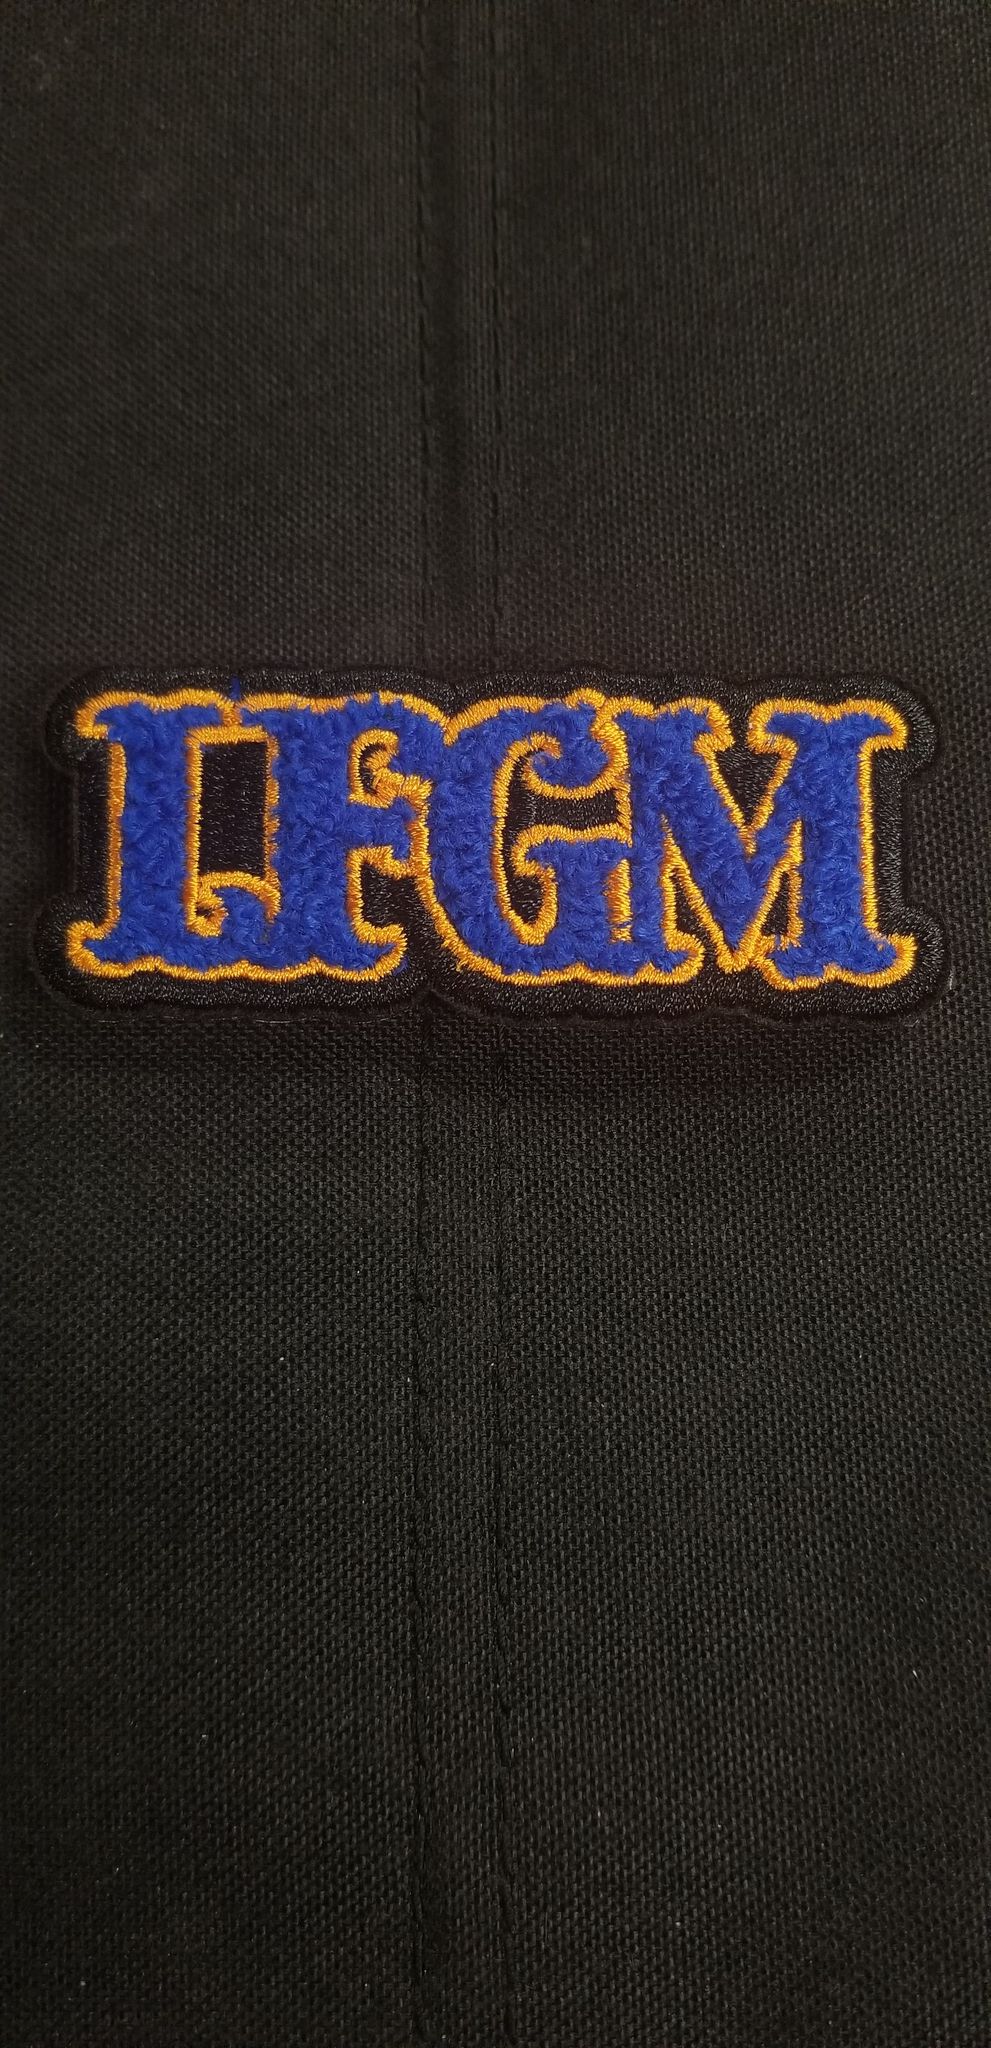 LFGM patch